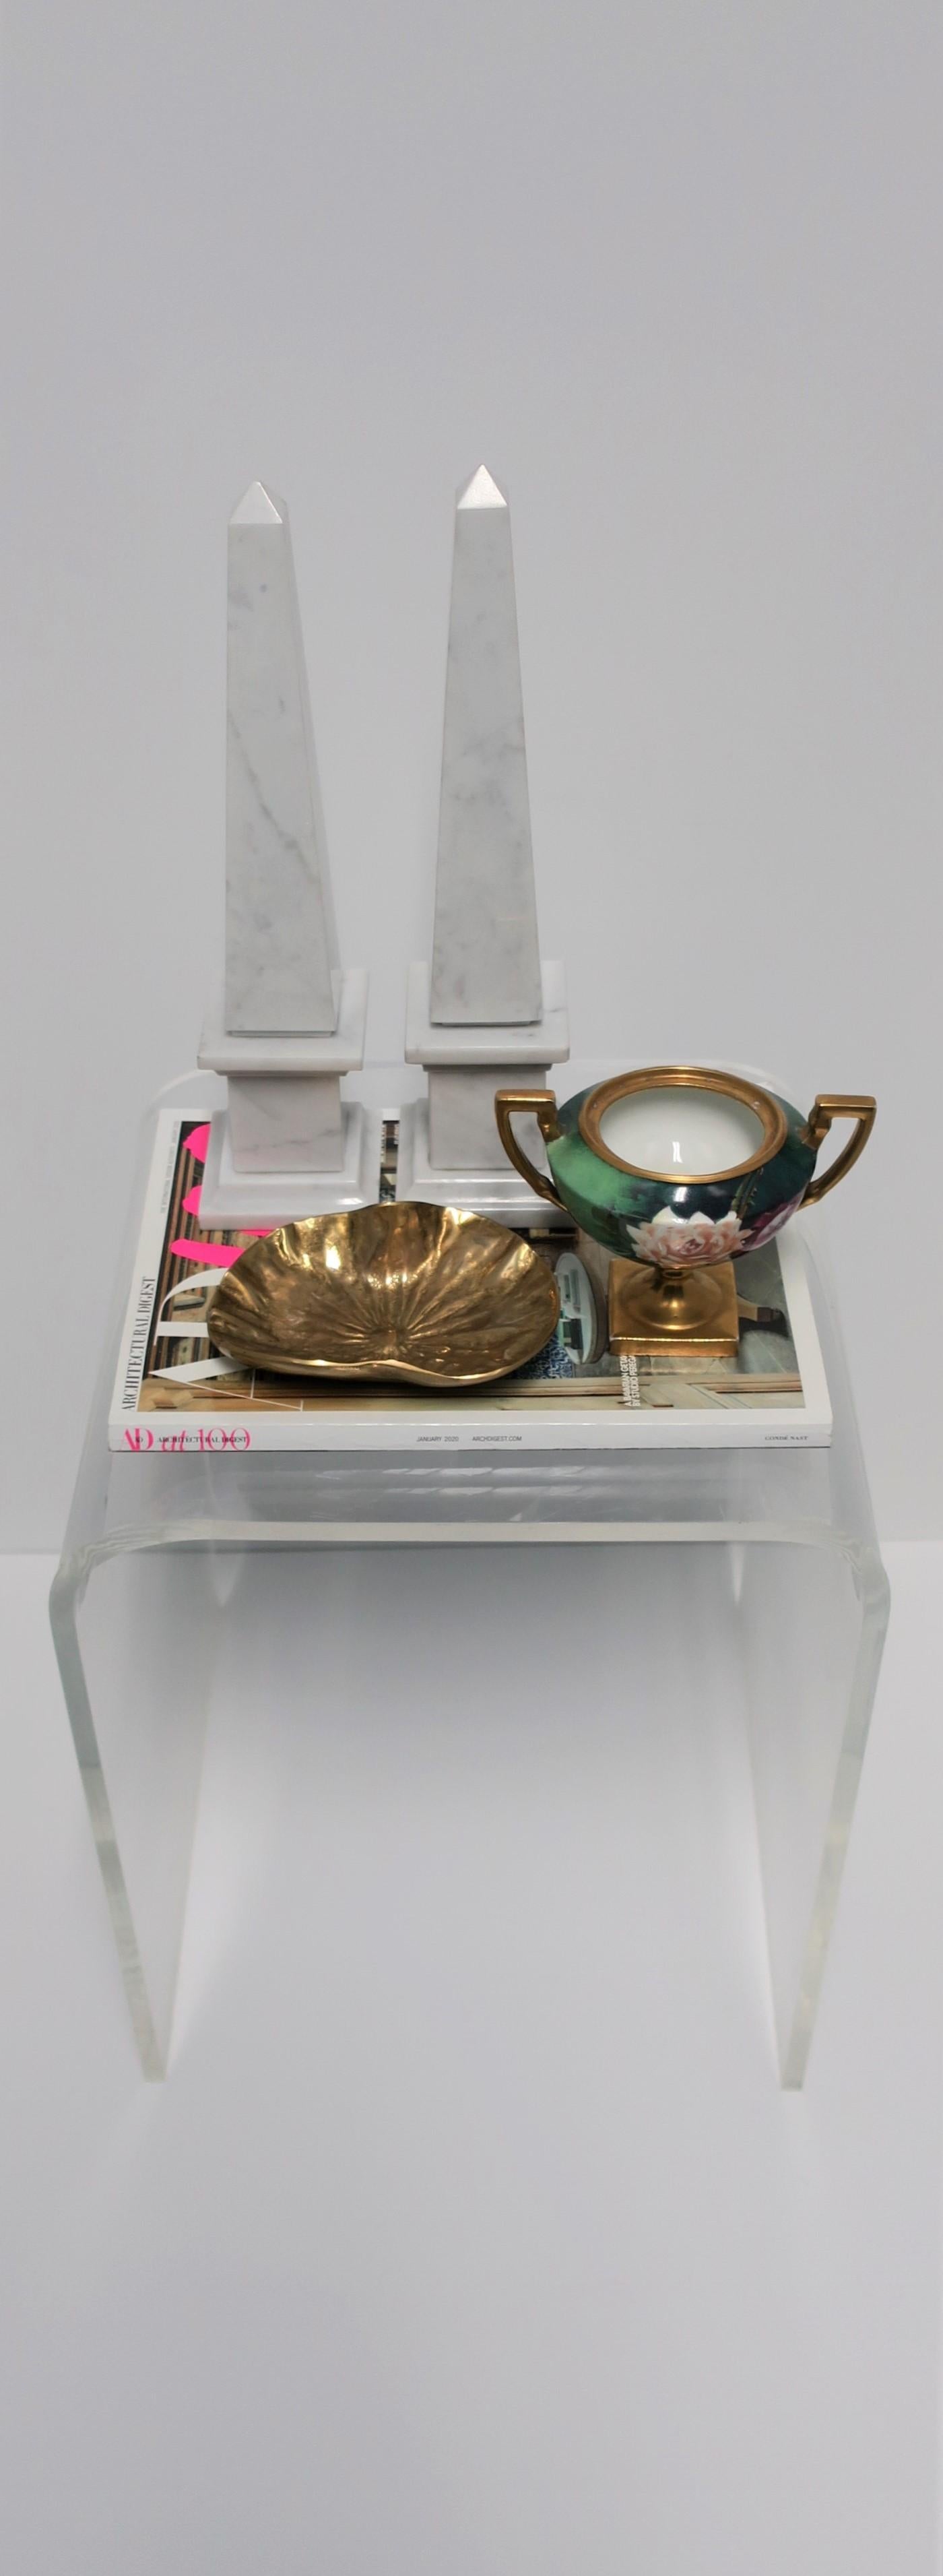 Brass Jewelry Dish Lotus Flower by Designer Kelly Wearstler For Sale 10